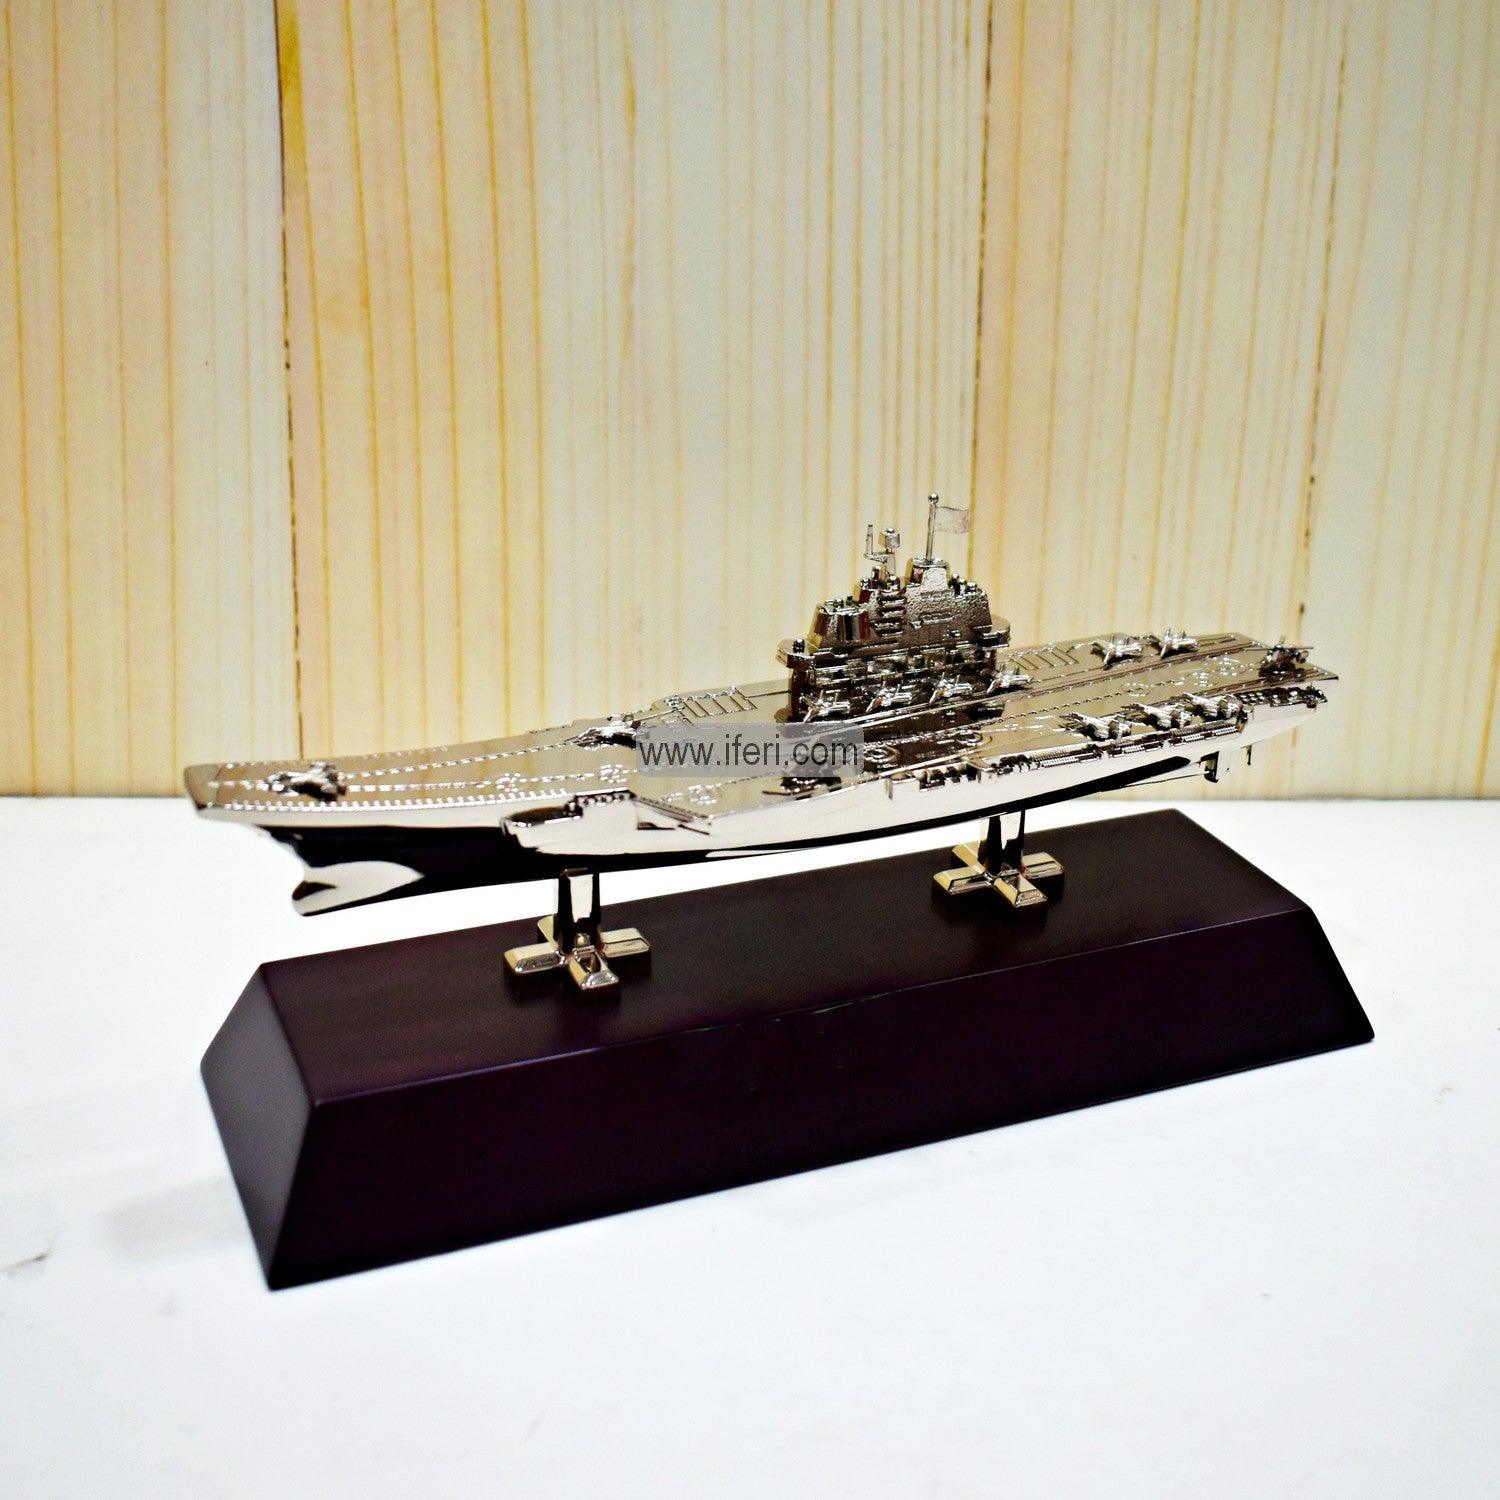 10 Inch Luxury Decorative Warship Showpiece RY0422 Price in Bangladesh - iferi.com